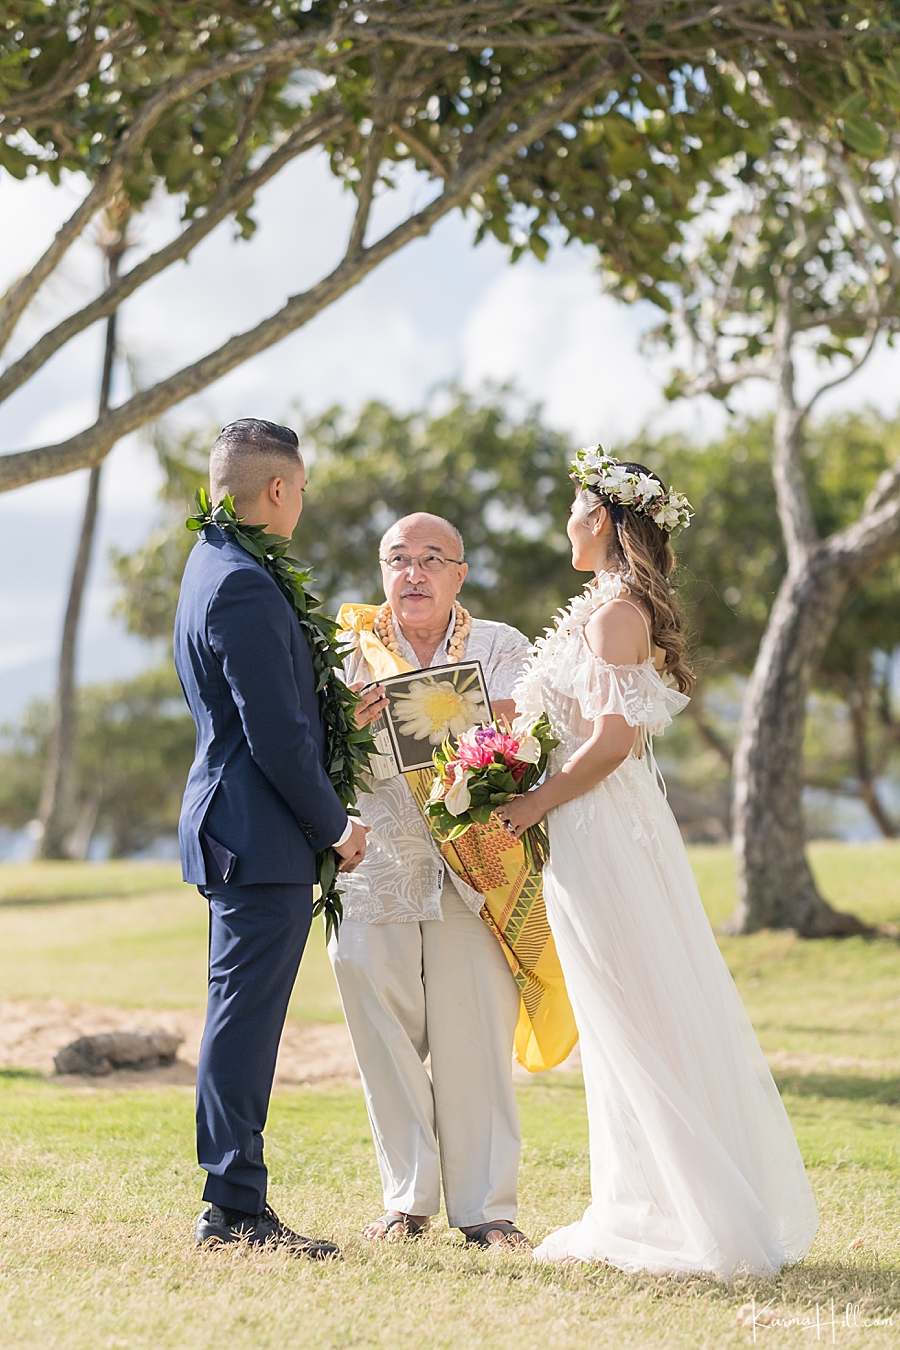 Oahu wedding officiants
